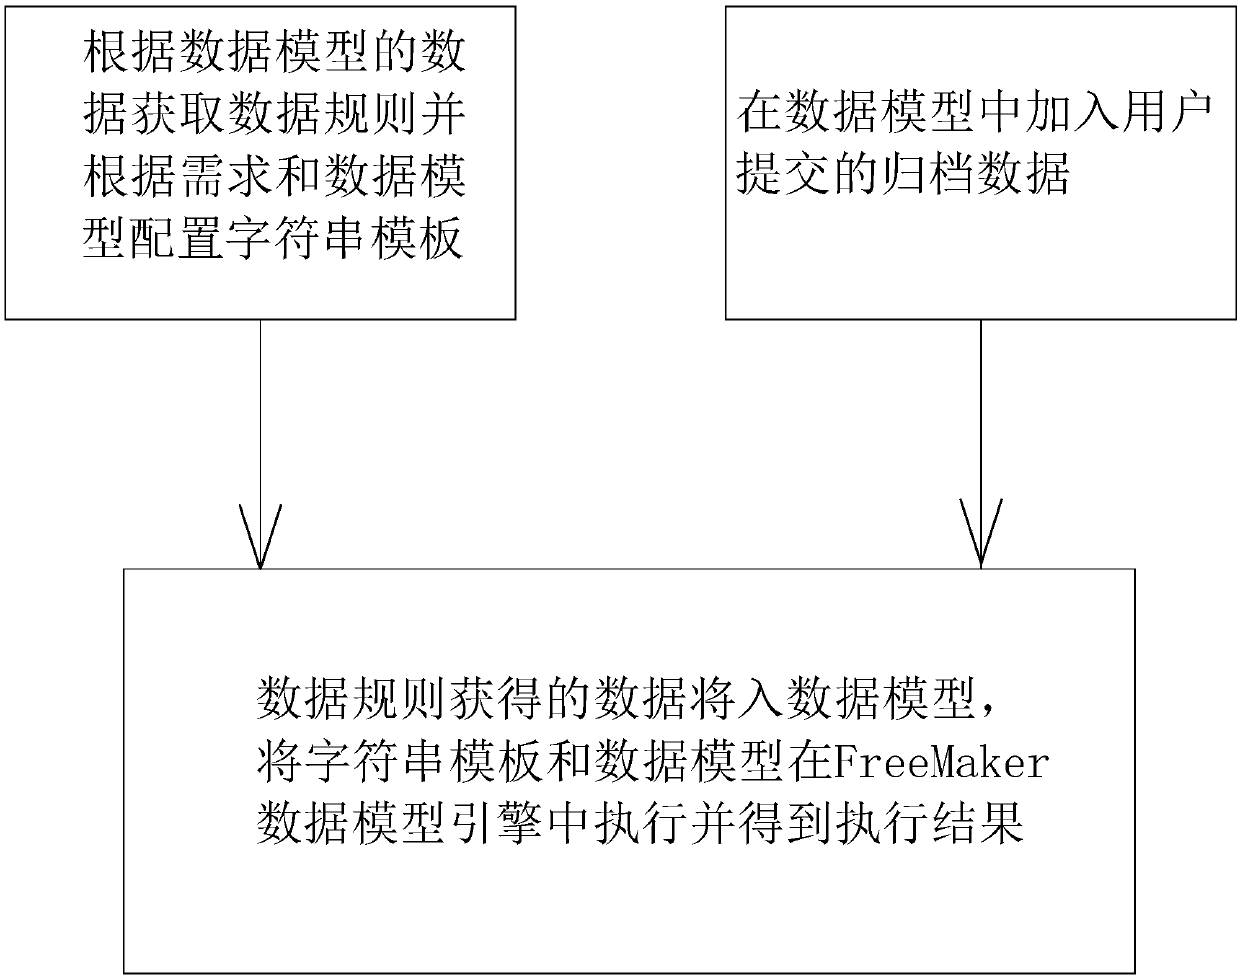 Freemarker technology-based data normalization verification method and a Freemarker technology-based data normalization verification device